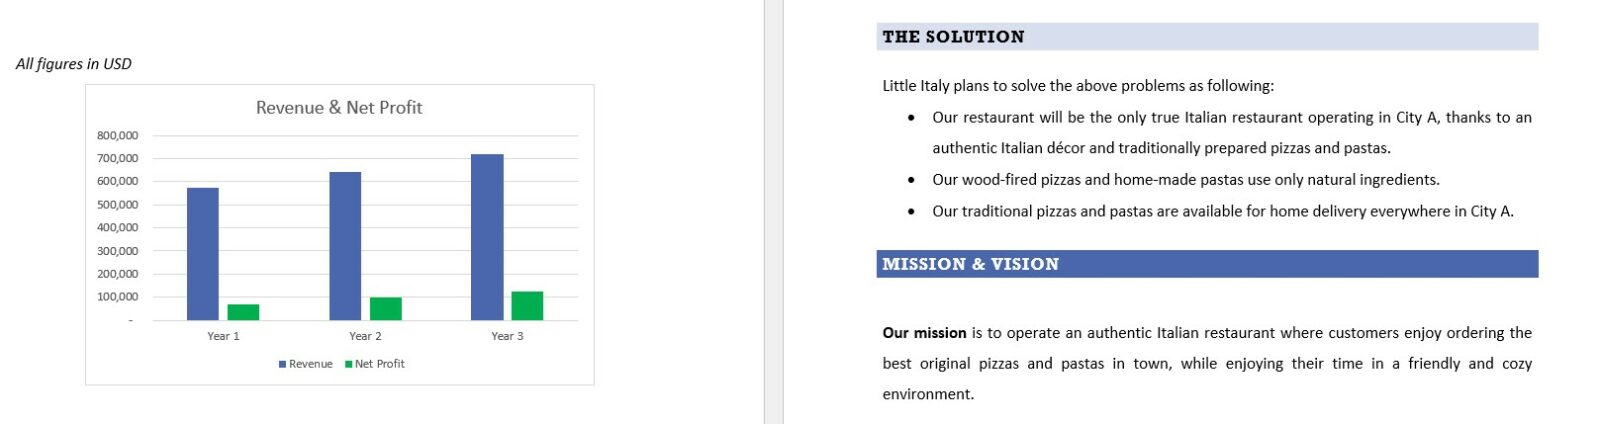 italian restaurant business plan